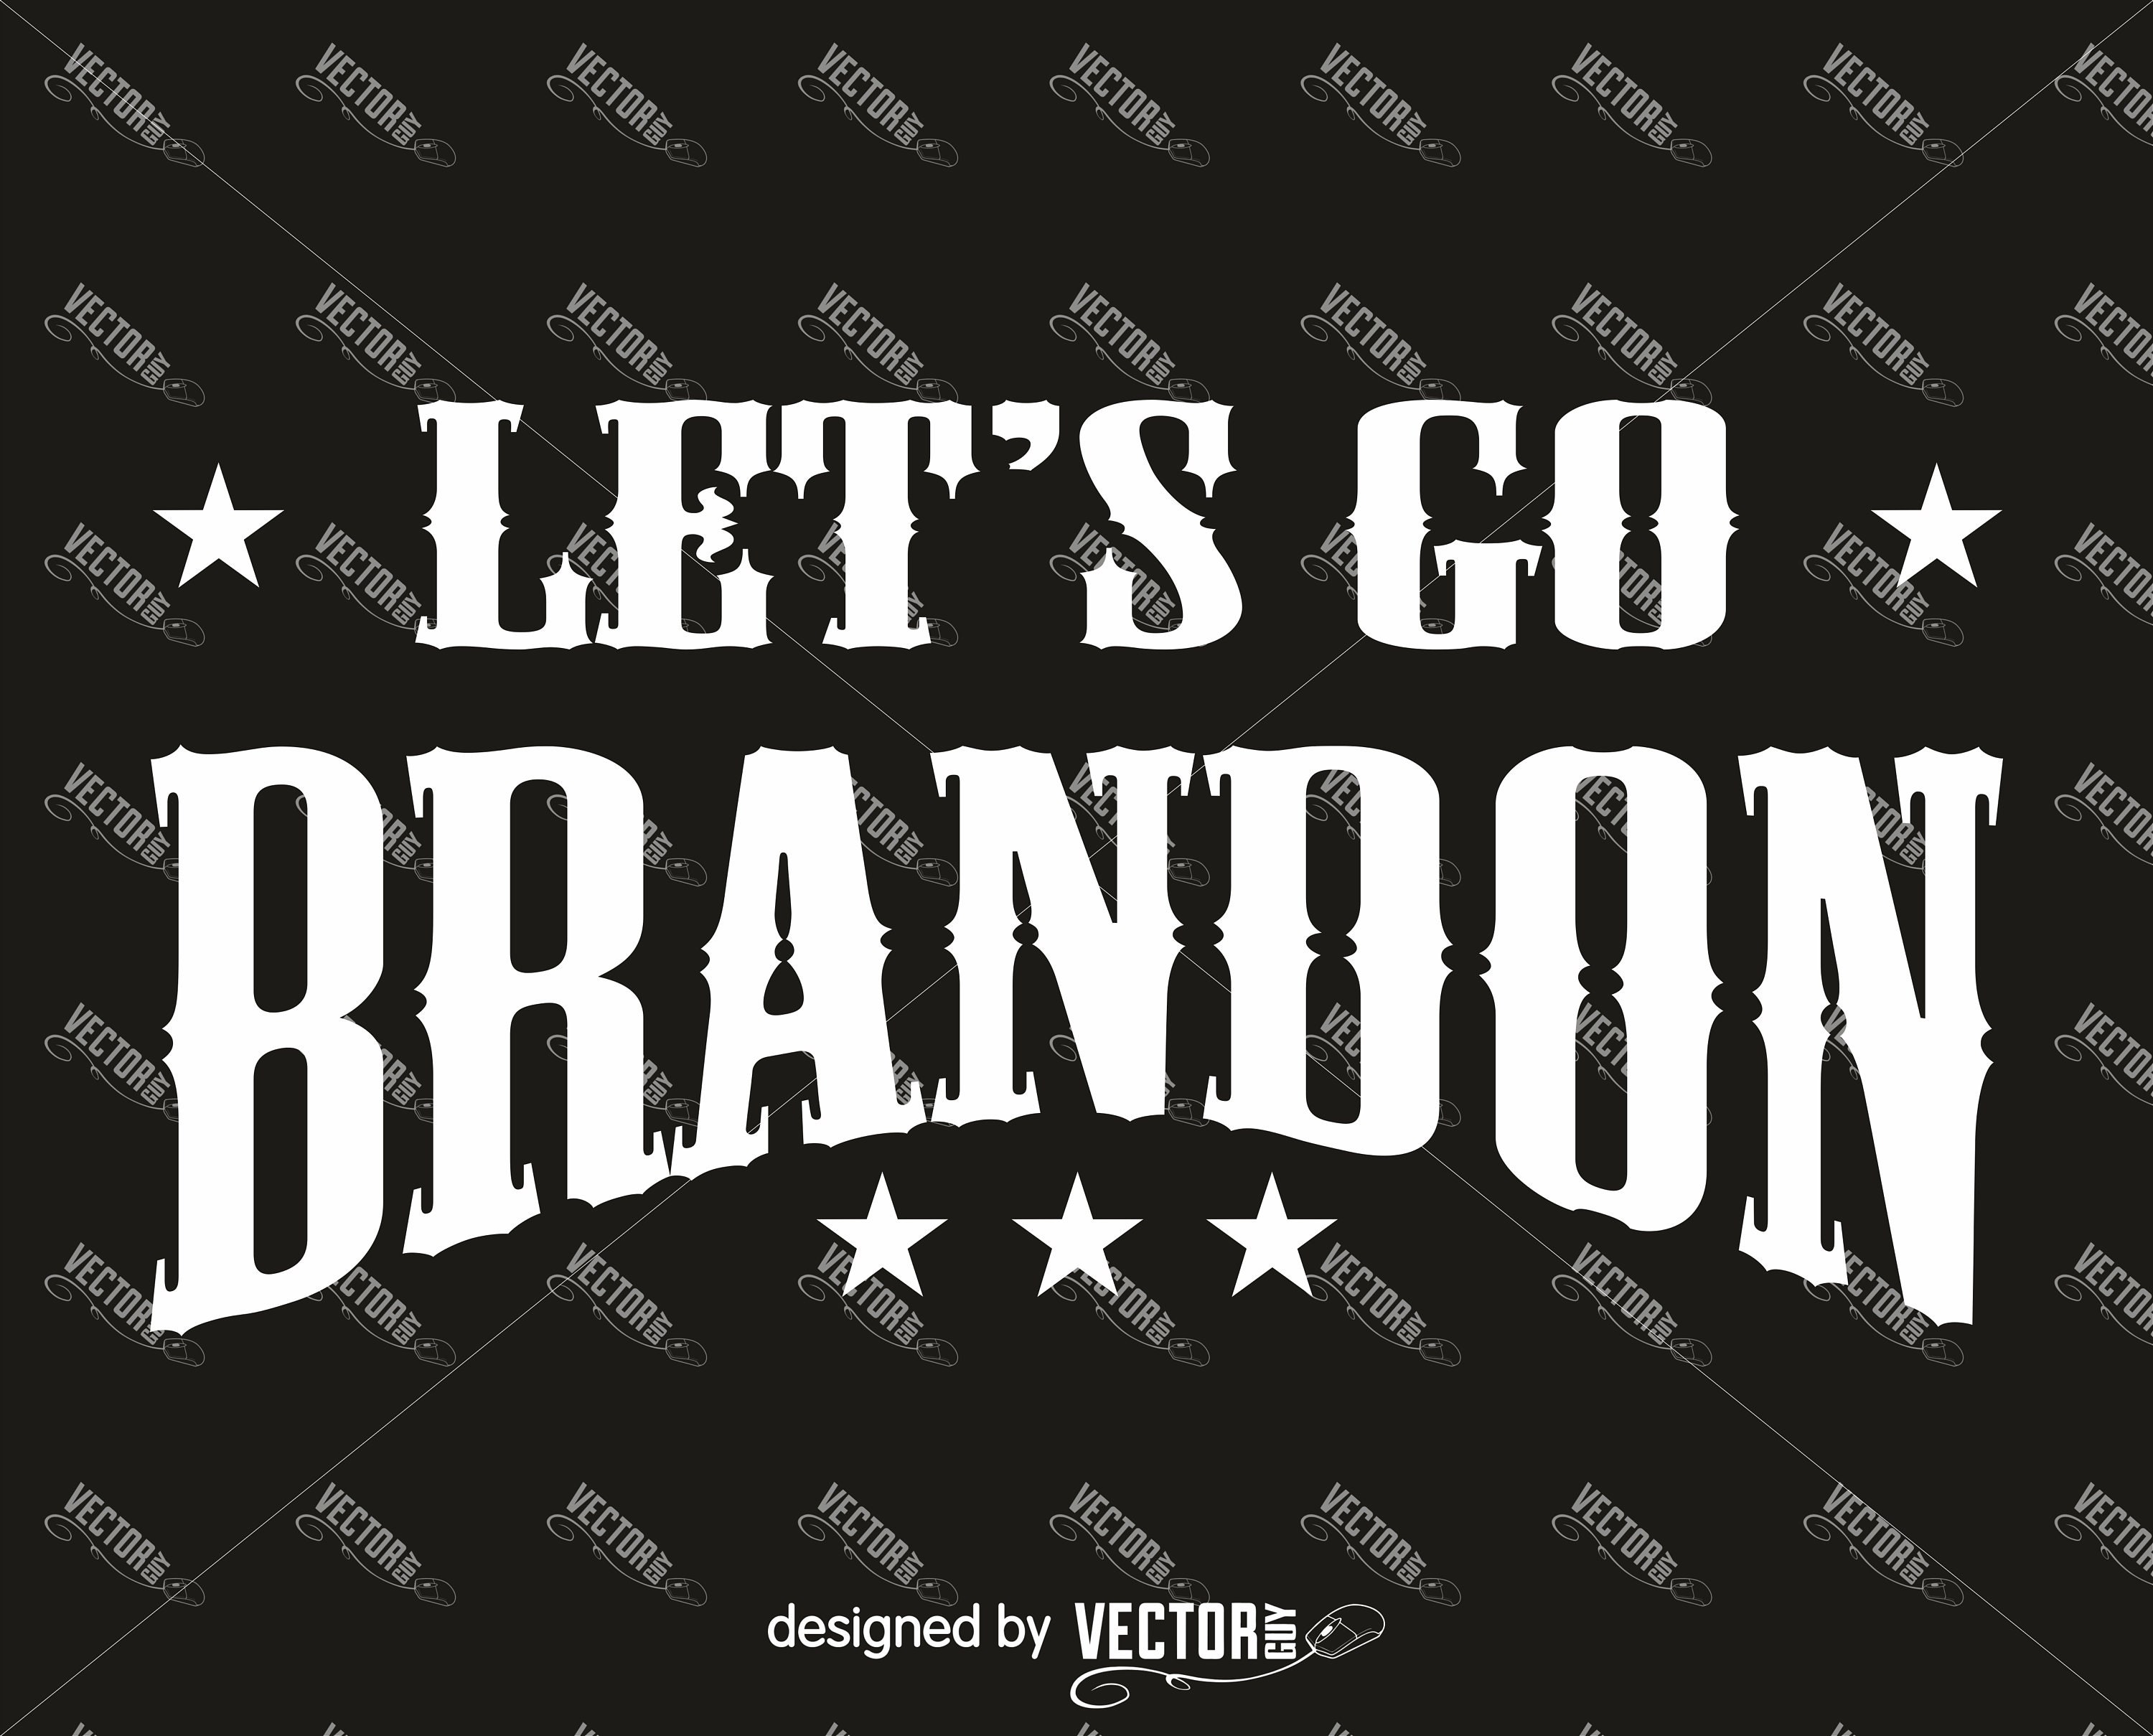 Brandon Shirt. Let's Go Brandon Conservative US Flag T-Shirt Design.  4413059 Vector Art at Vecteezy